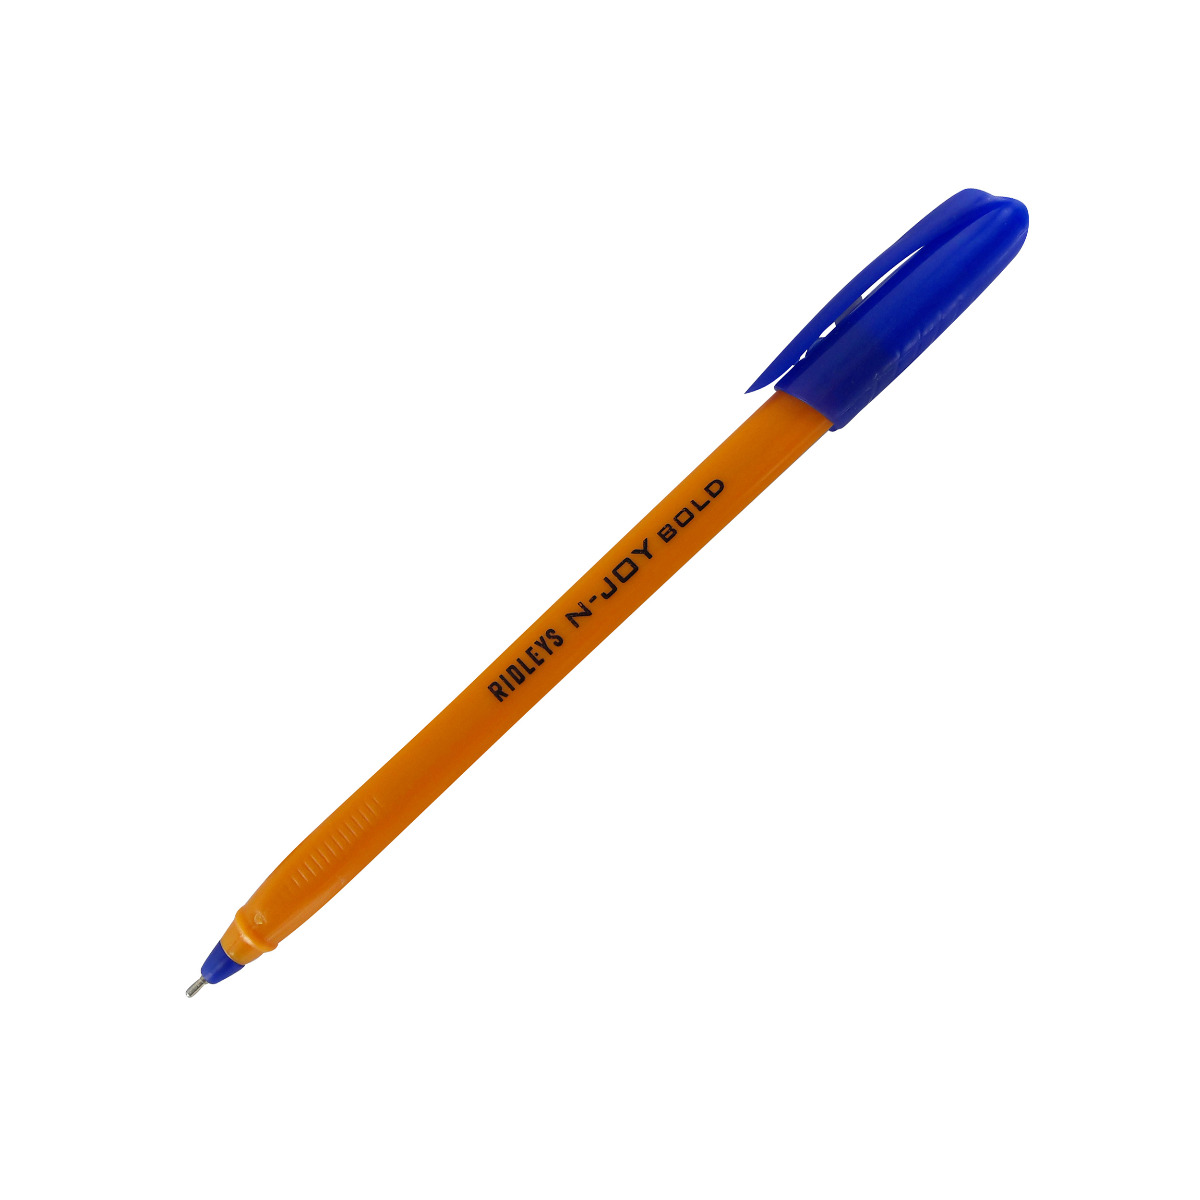 Ridleys Model No: 12038 N Joy Bolo Blue Color Writing Orange Color Body Gel pen